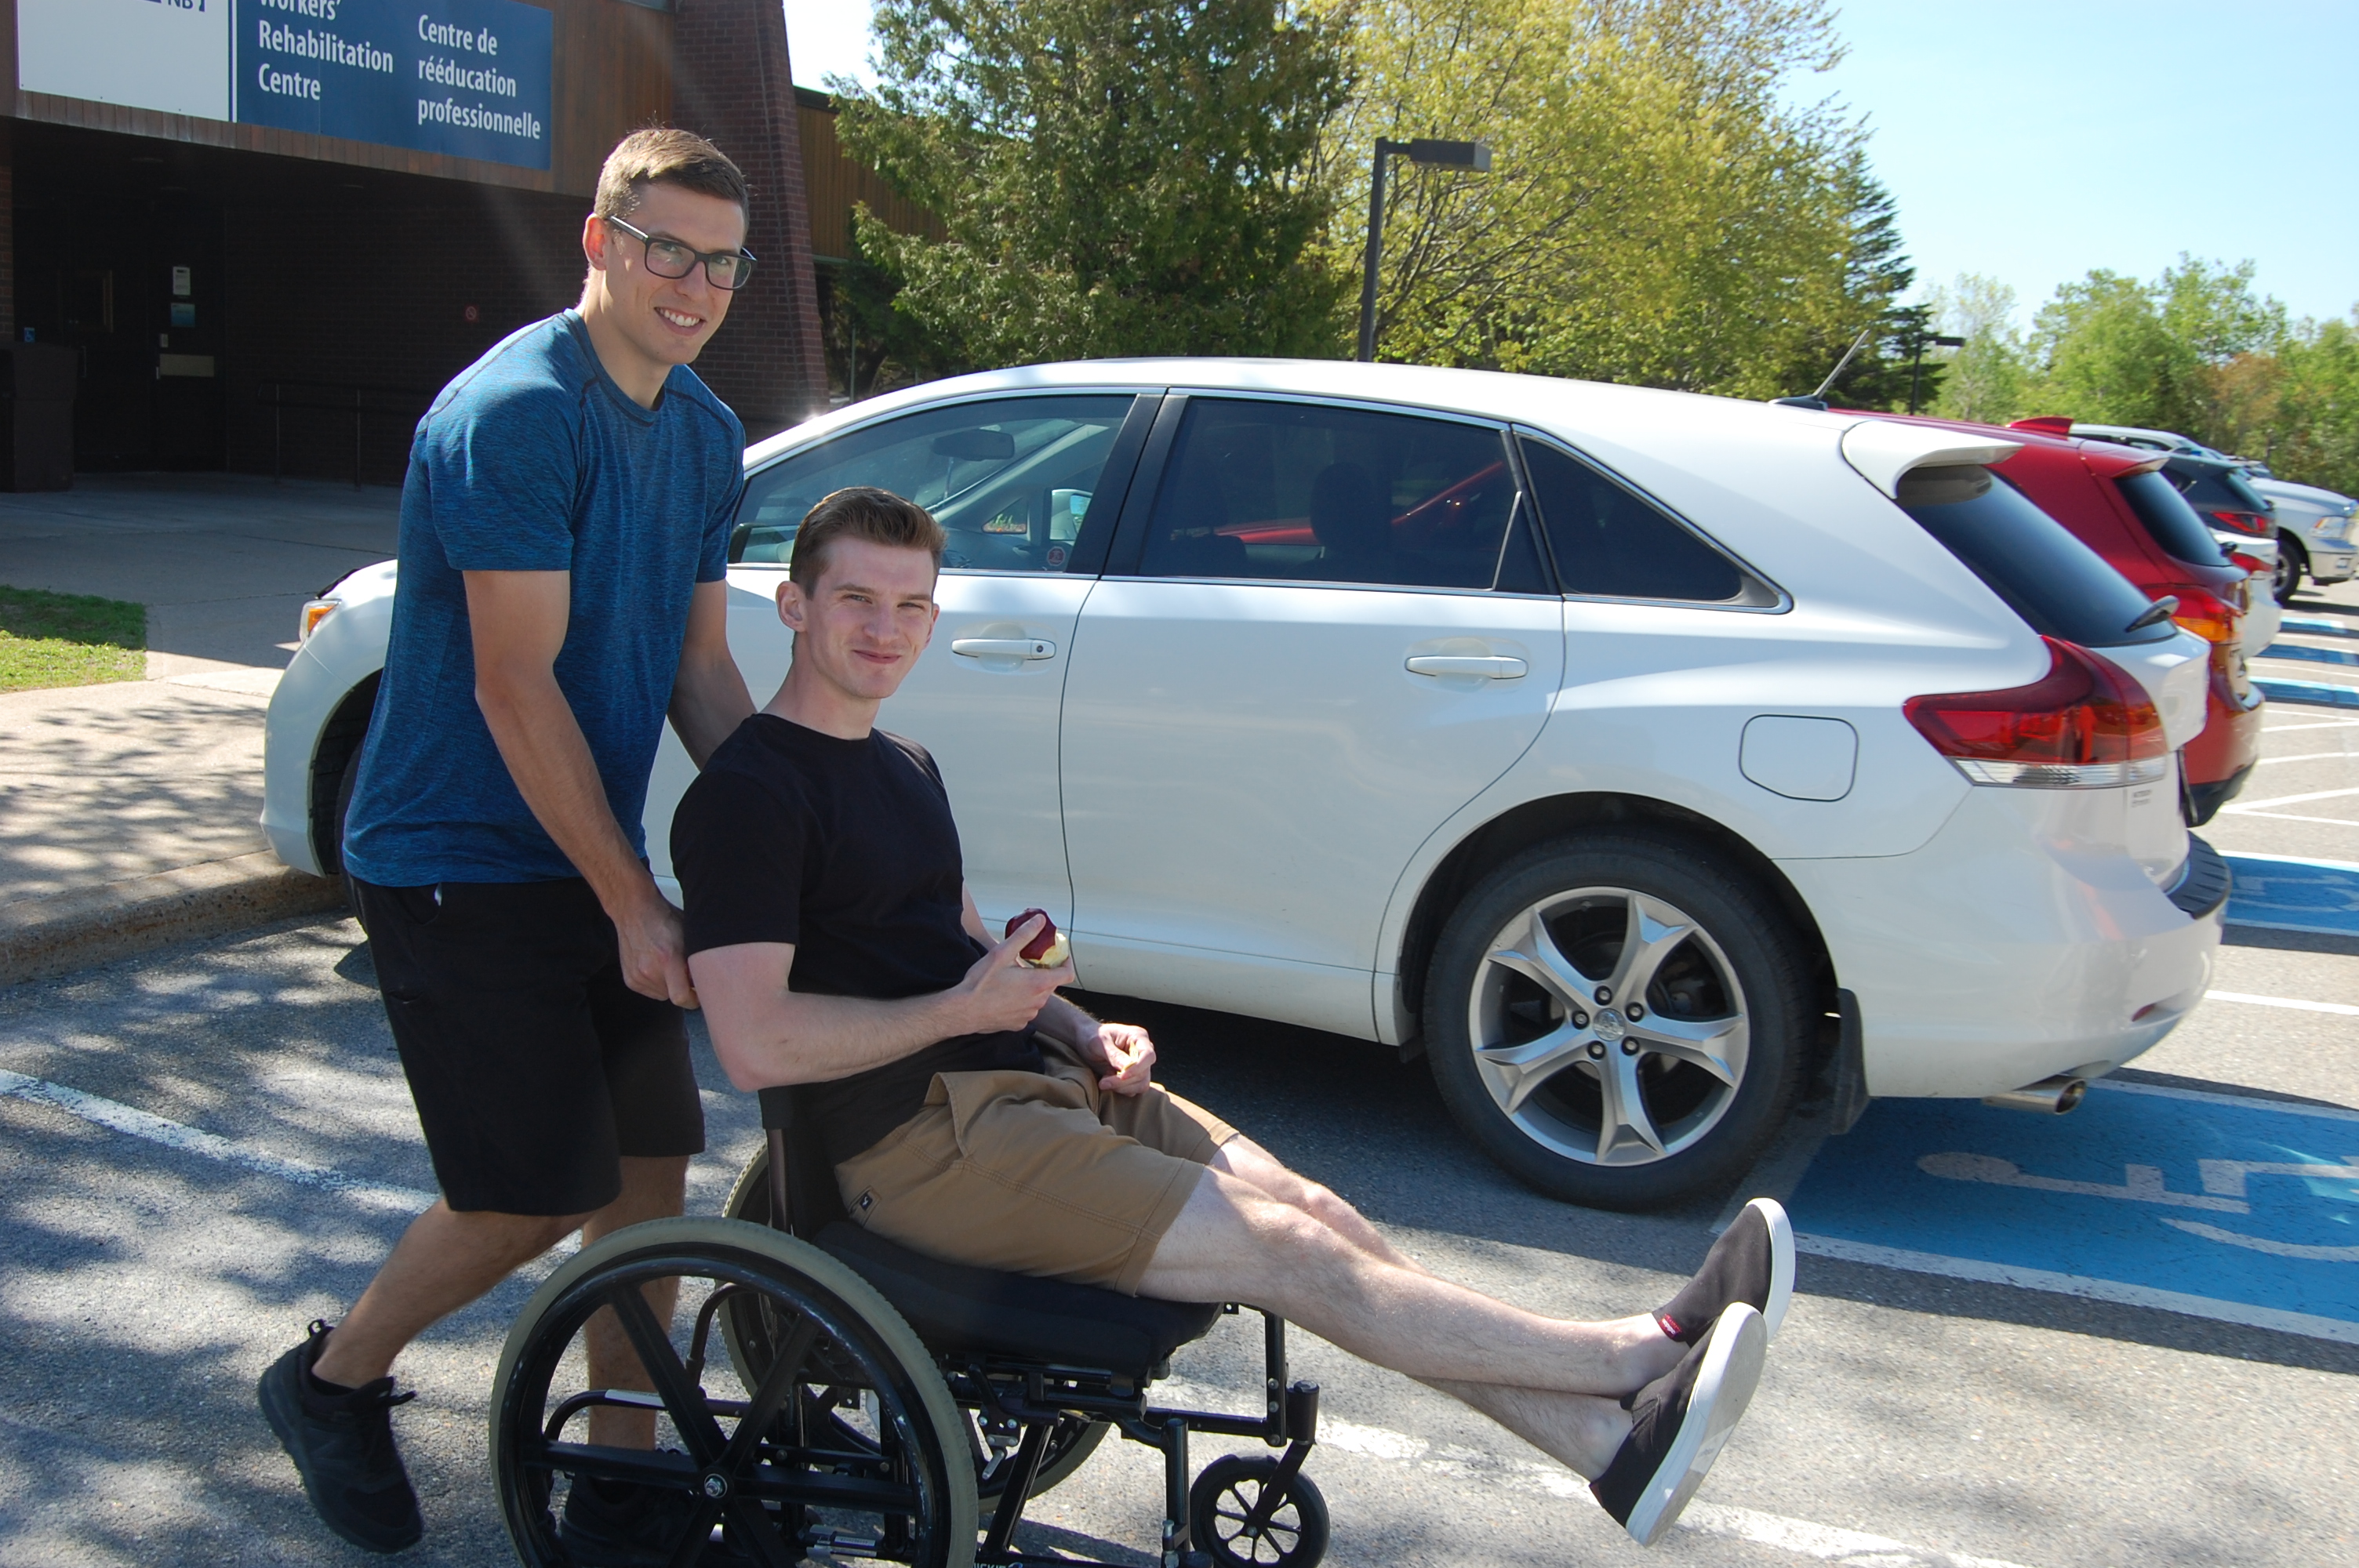 WorkSafeNB occupational therapist Andy West helps summer student Brandon Sloot navigate his wheelchair around WorkSafeNB’s Rehabilitation Centre in Grand Bay-Westfield.